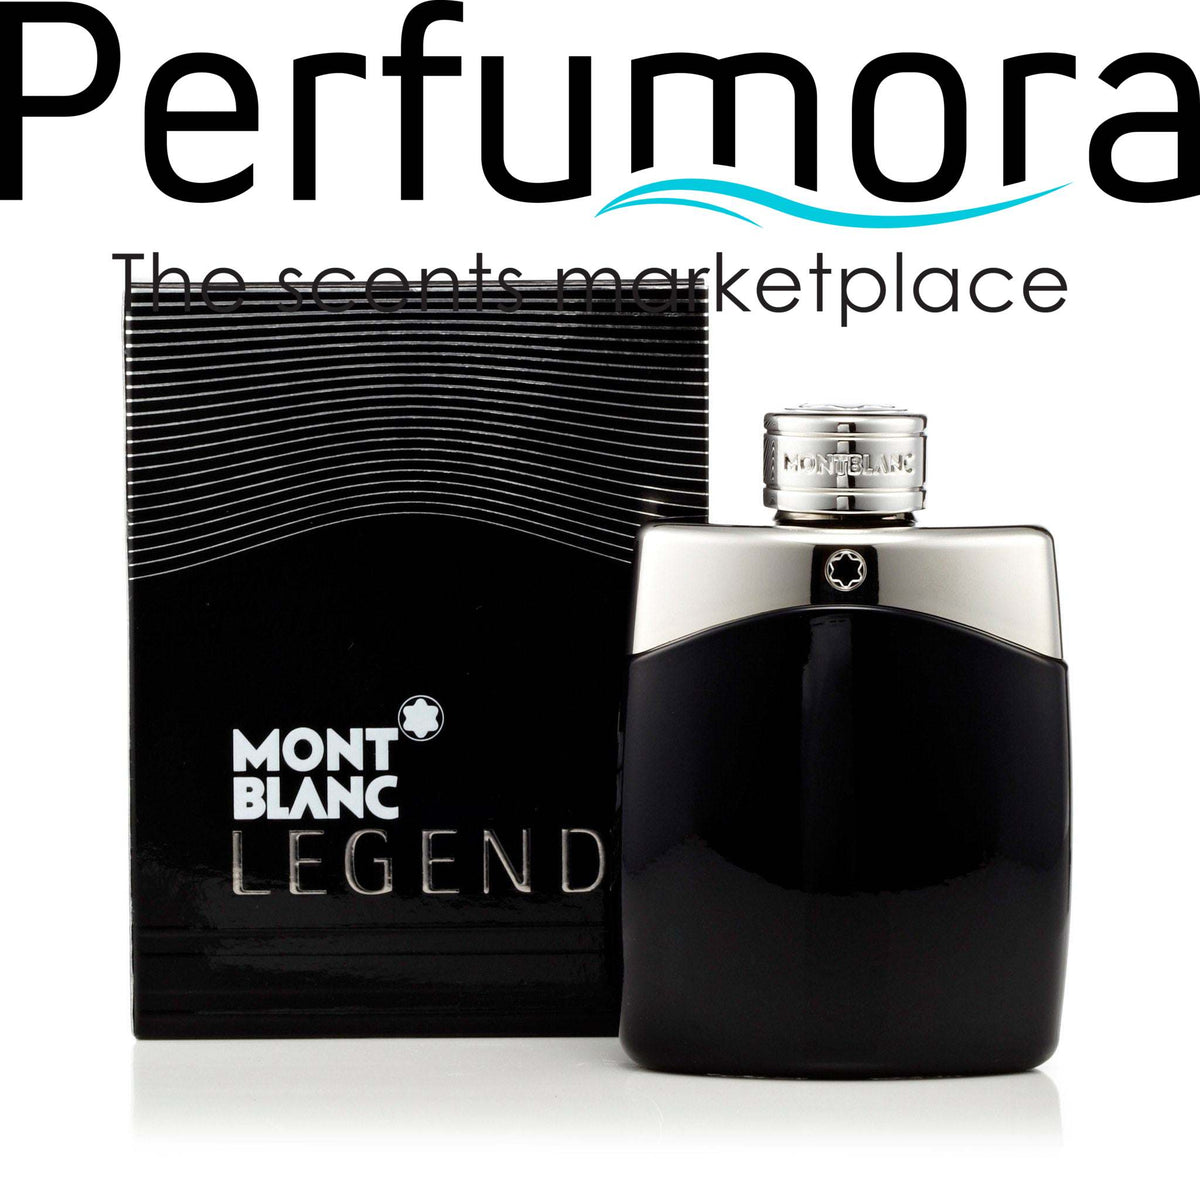 Mont Blanc Legend EDT Spray For Men - Perfumora